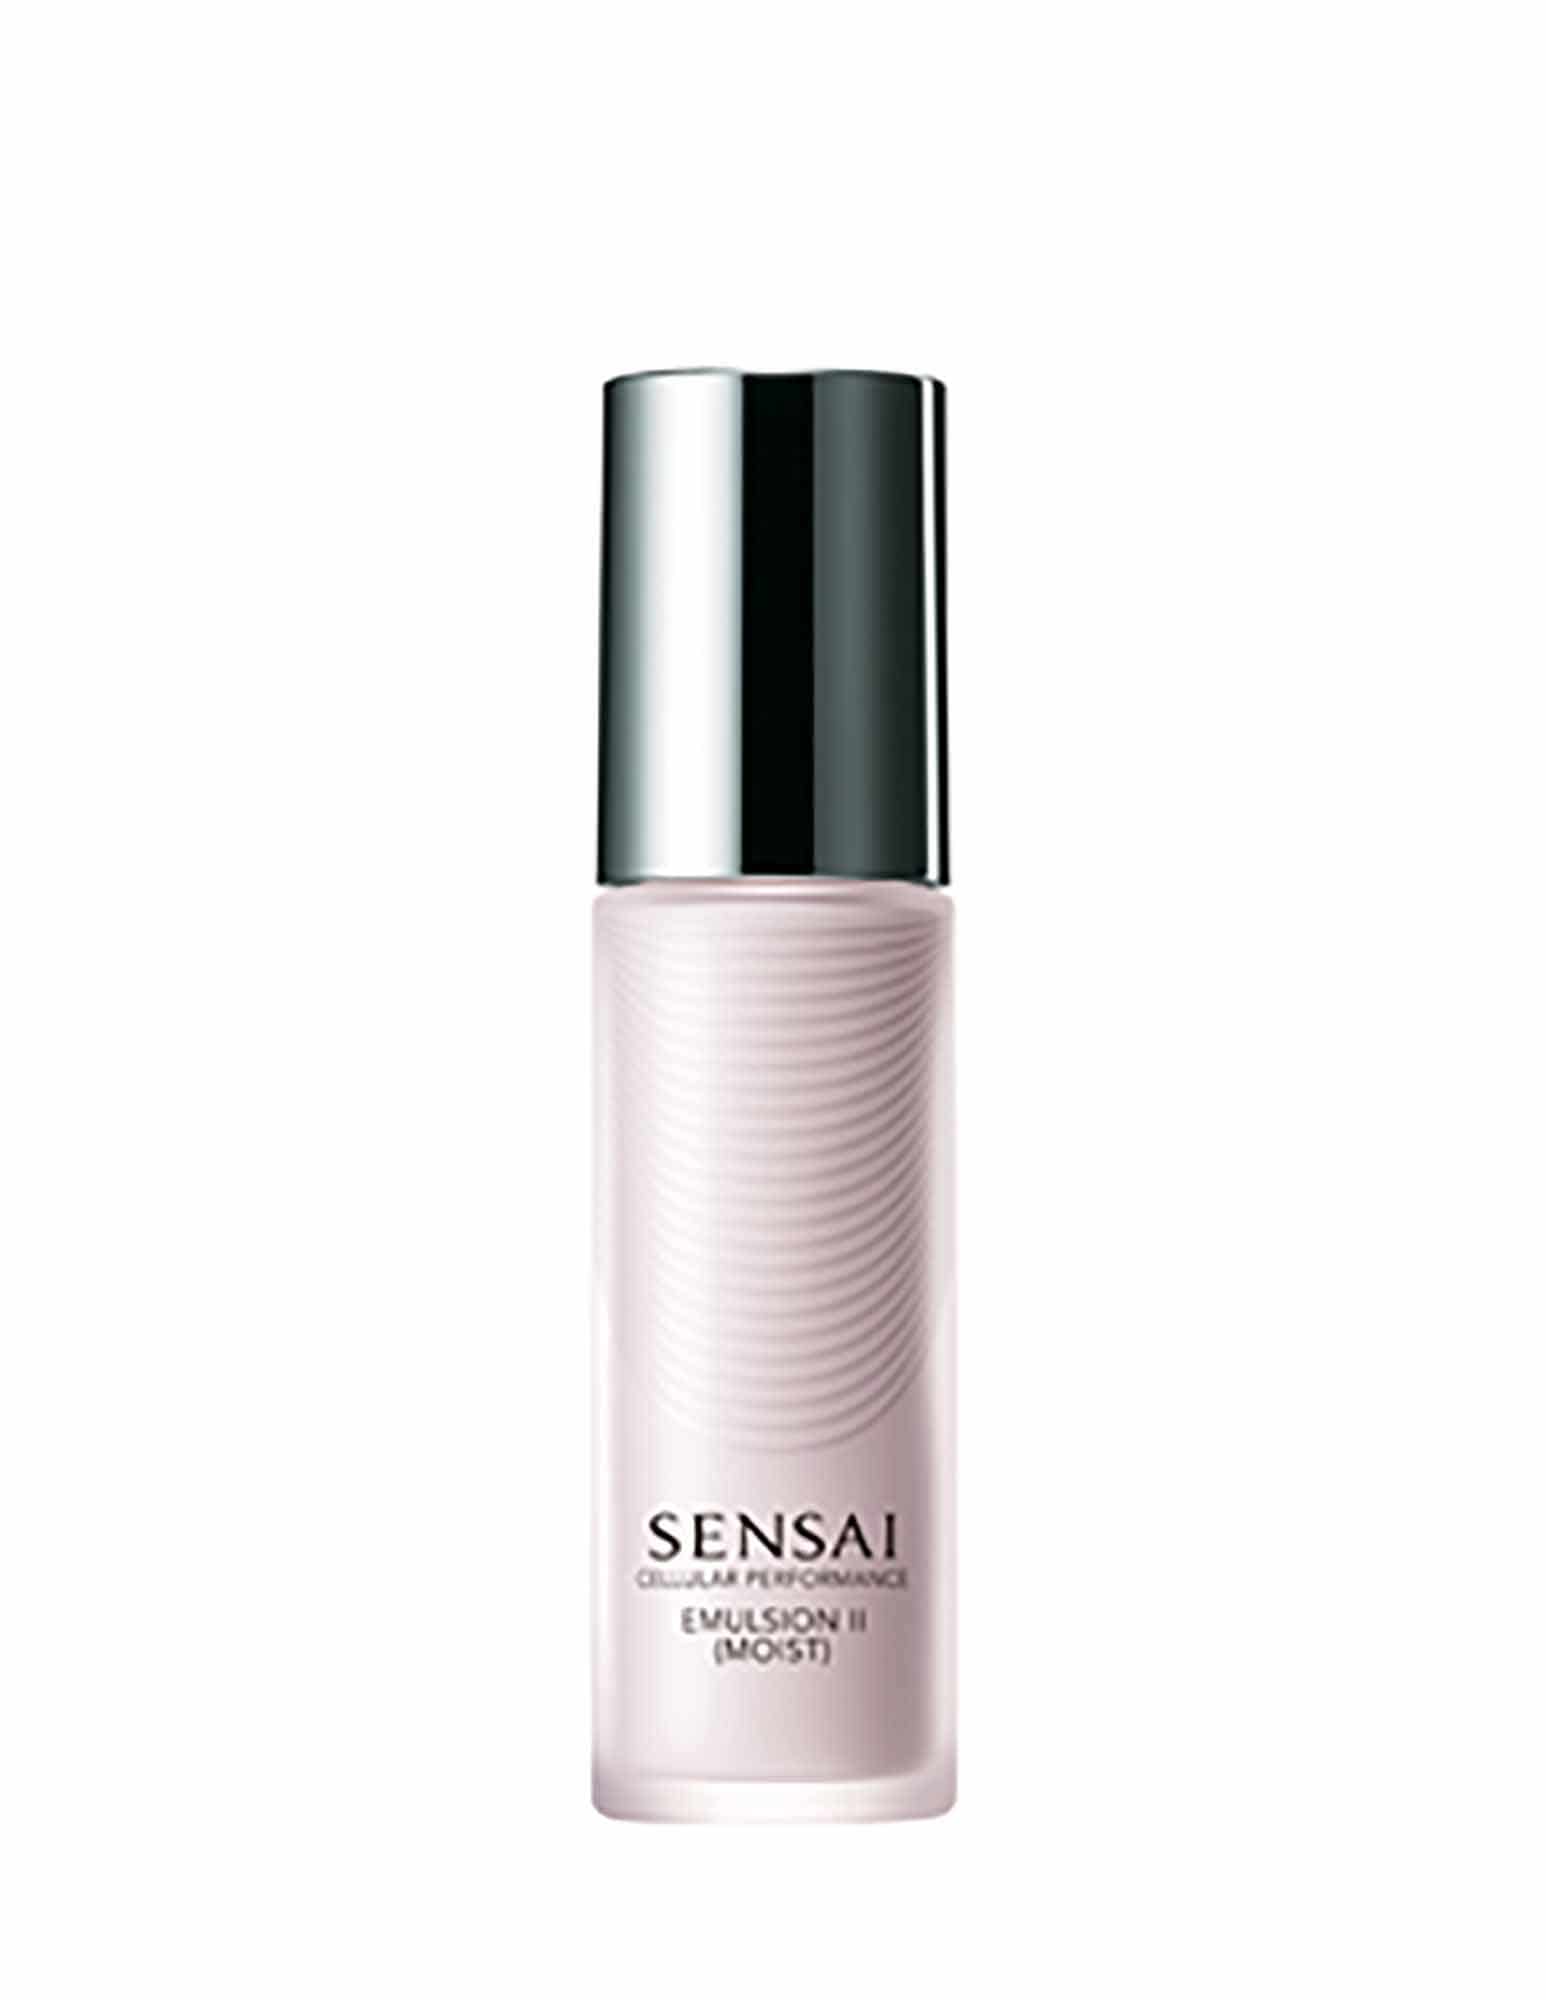 SENSAI Cellular Performance Emulsion II (Moist) 50 ml von Sensai